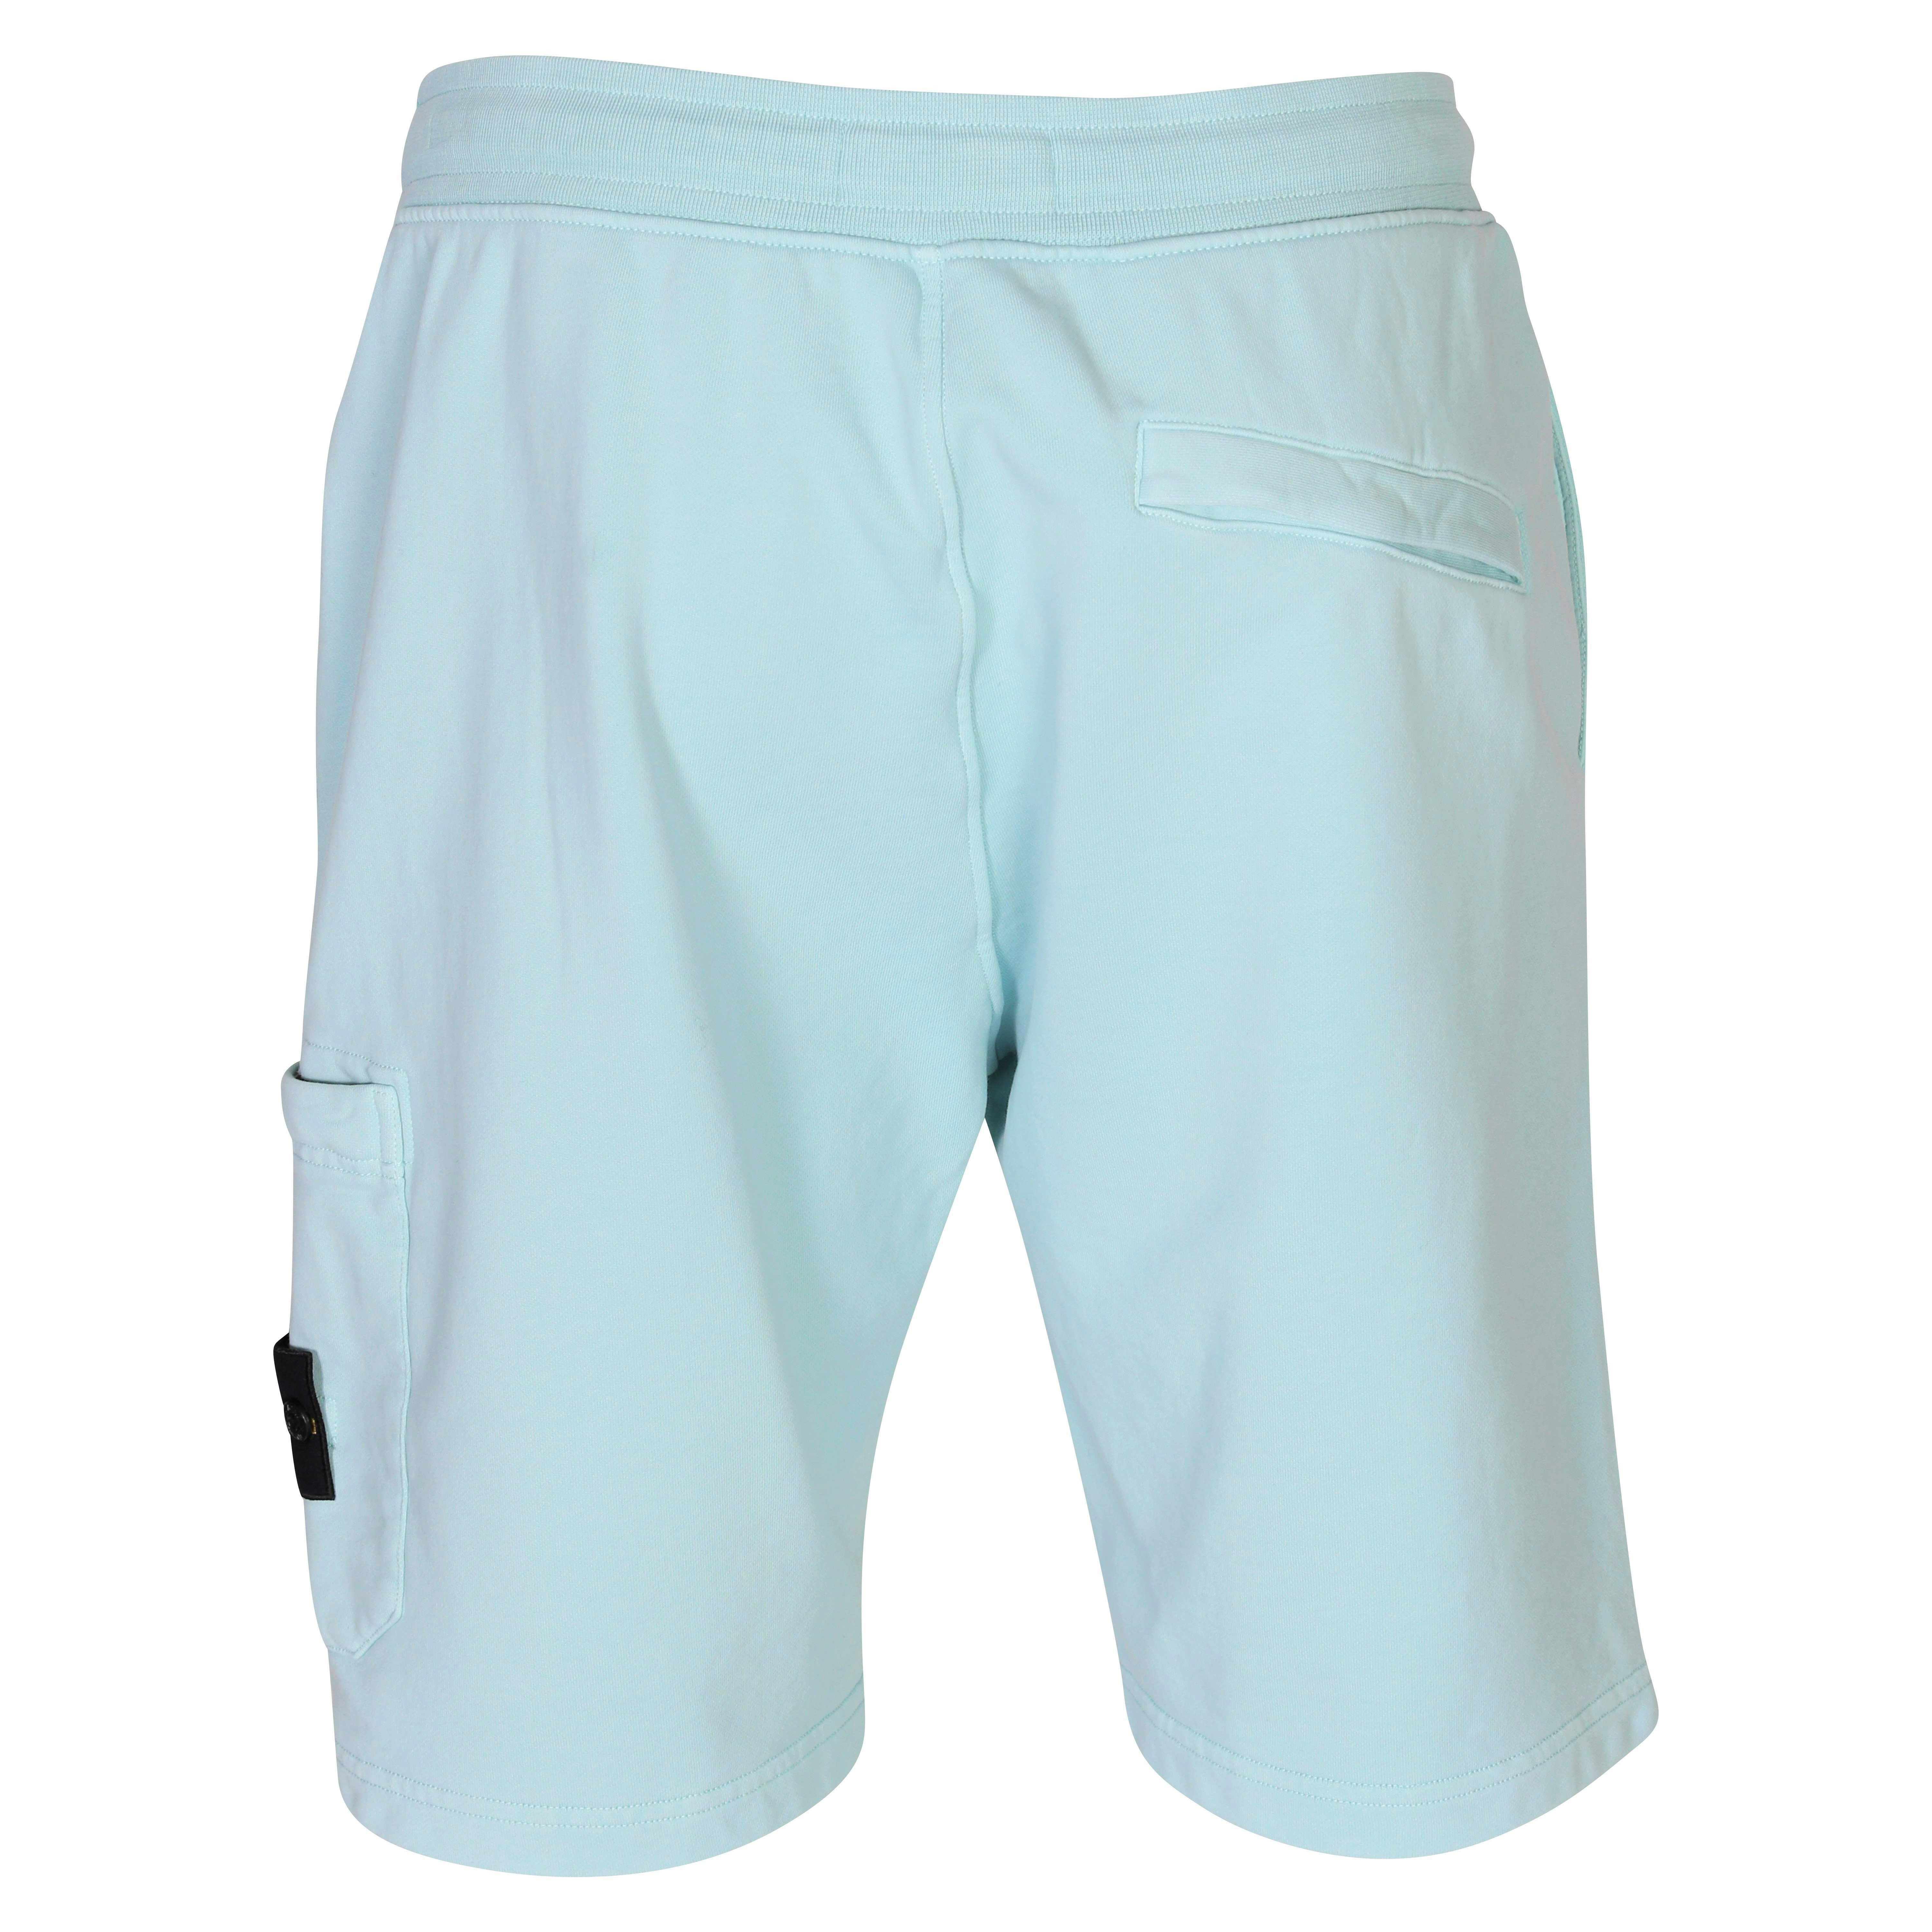 Stone Island Sweat Shorts in Light Blue S